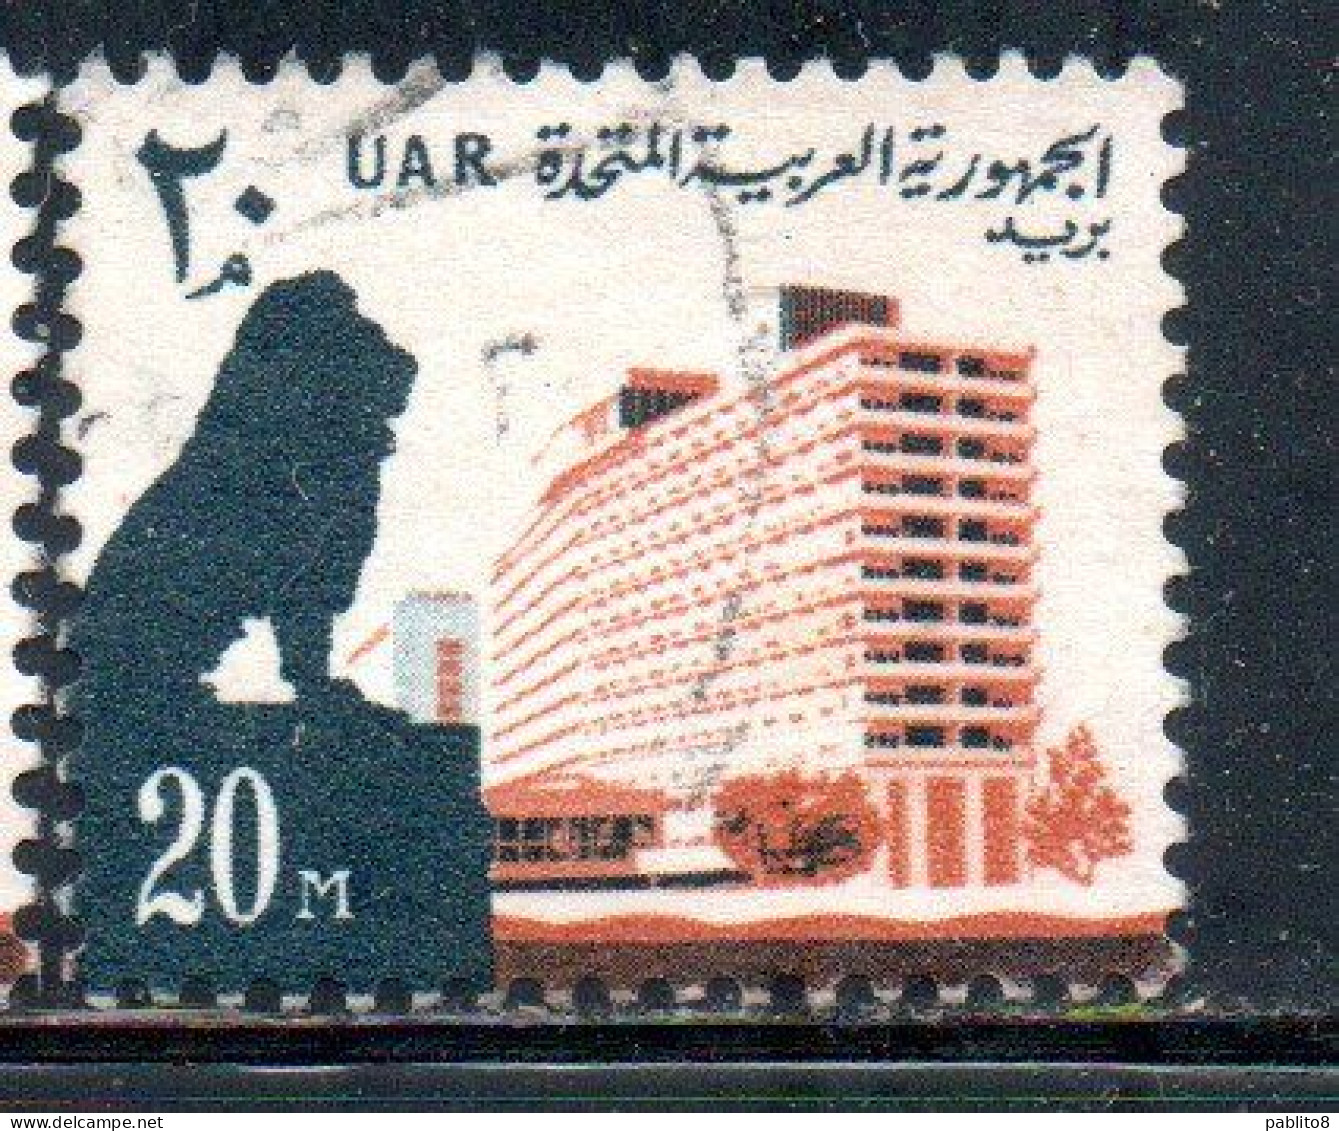 UAR EGYPT EGITTO 1964 1967 LION AND NILE HILTON HOTEL 20m USED USATO OBLITERE' - Used Stamps